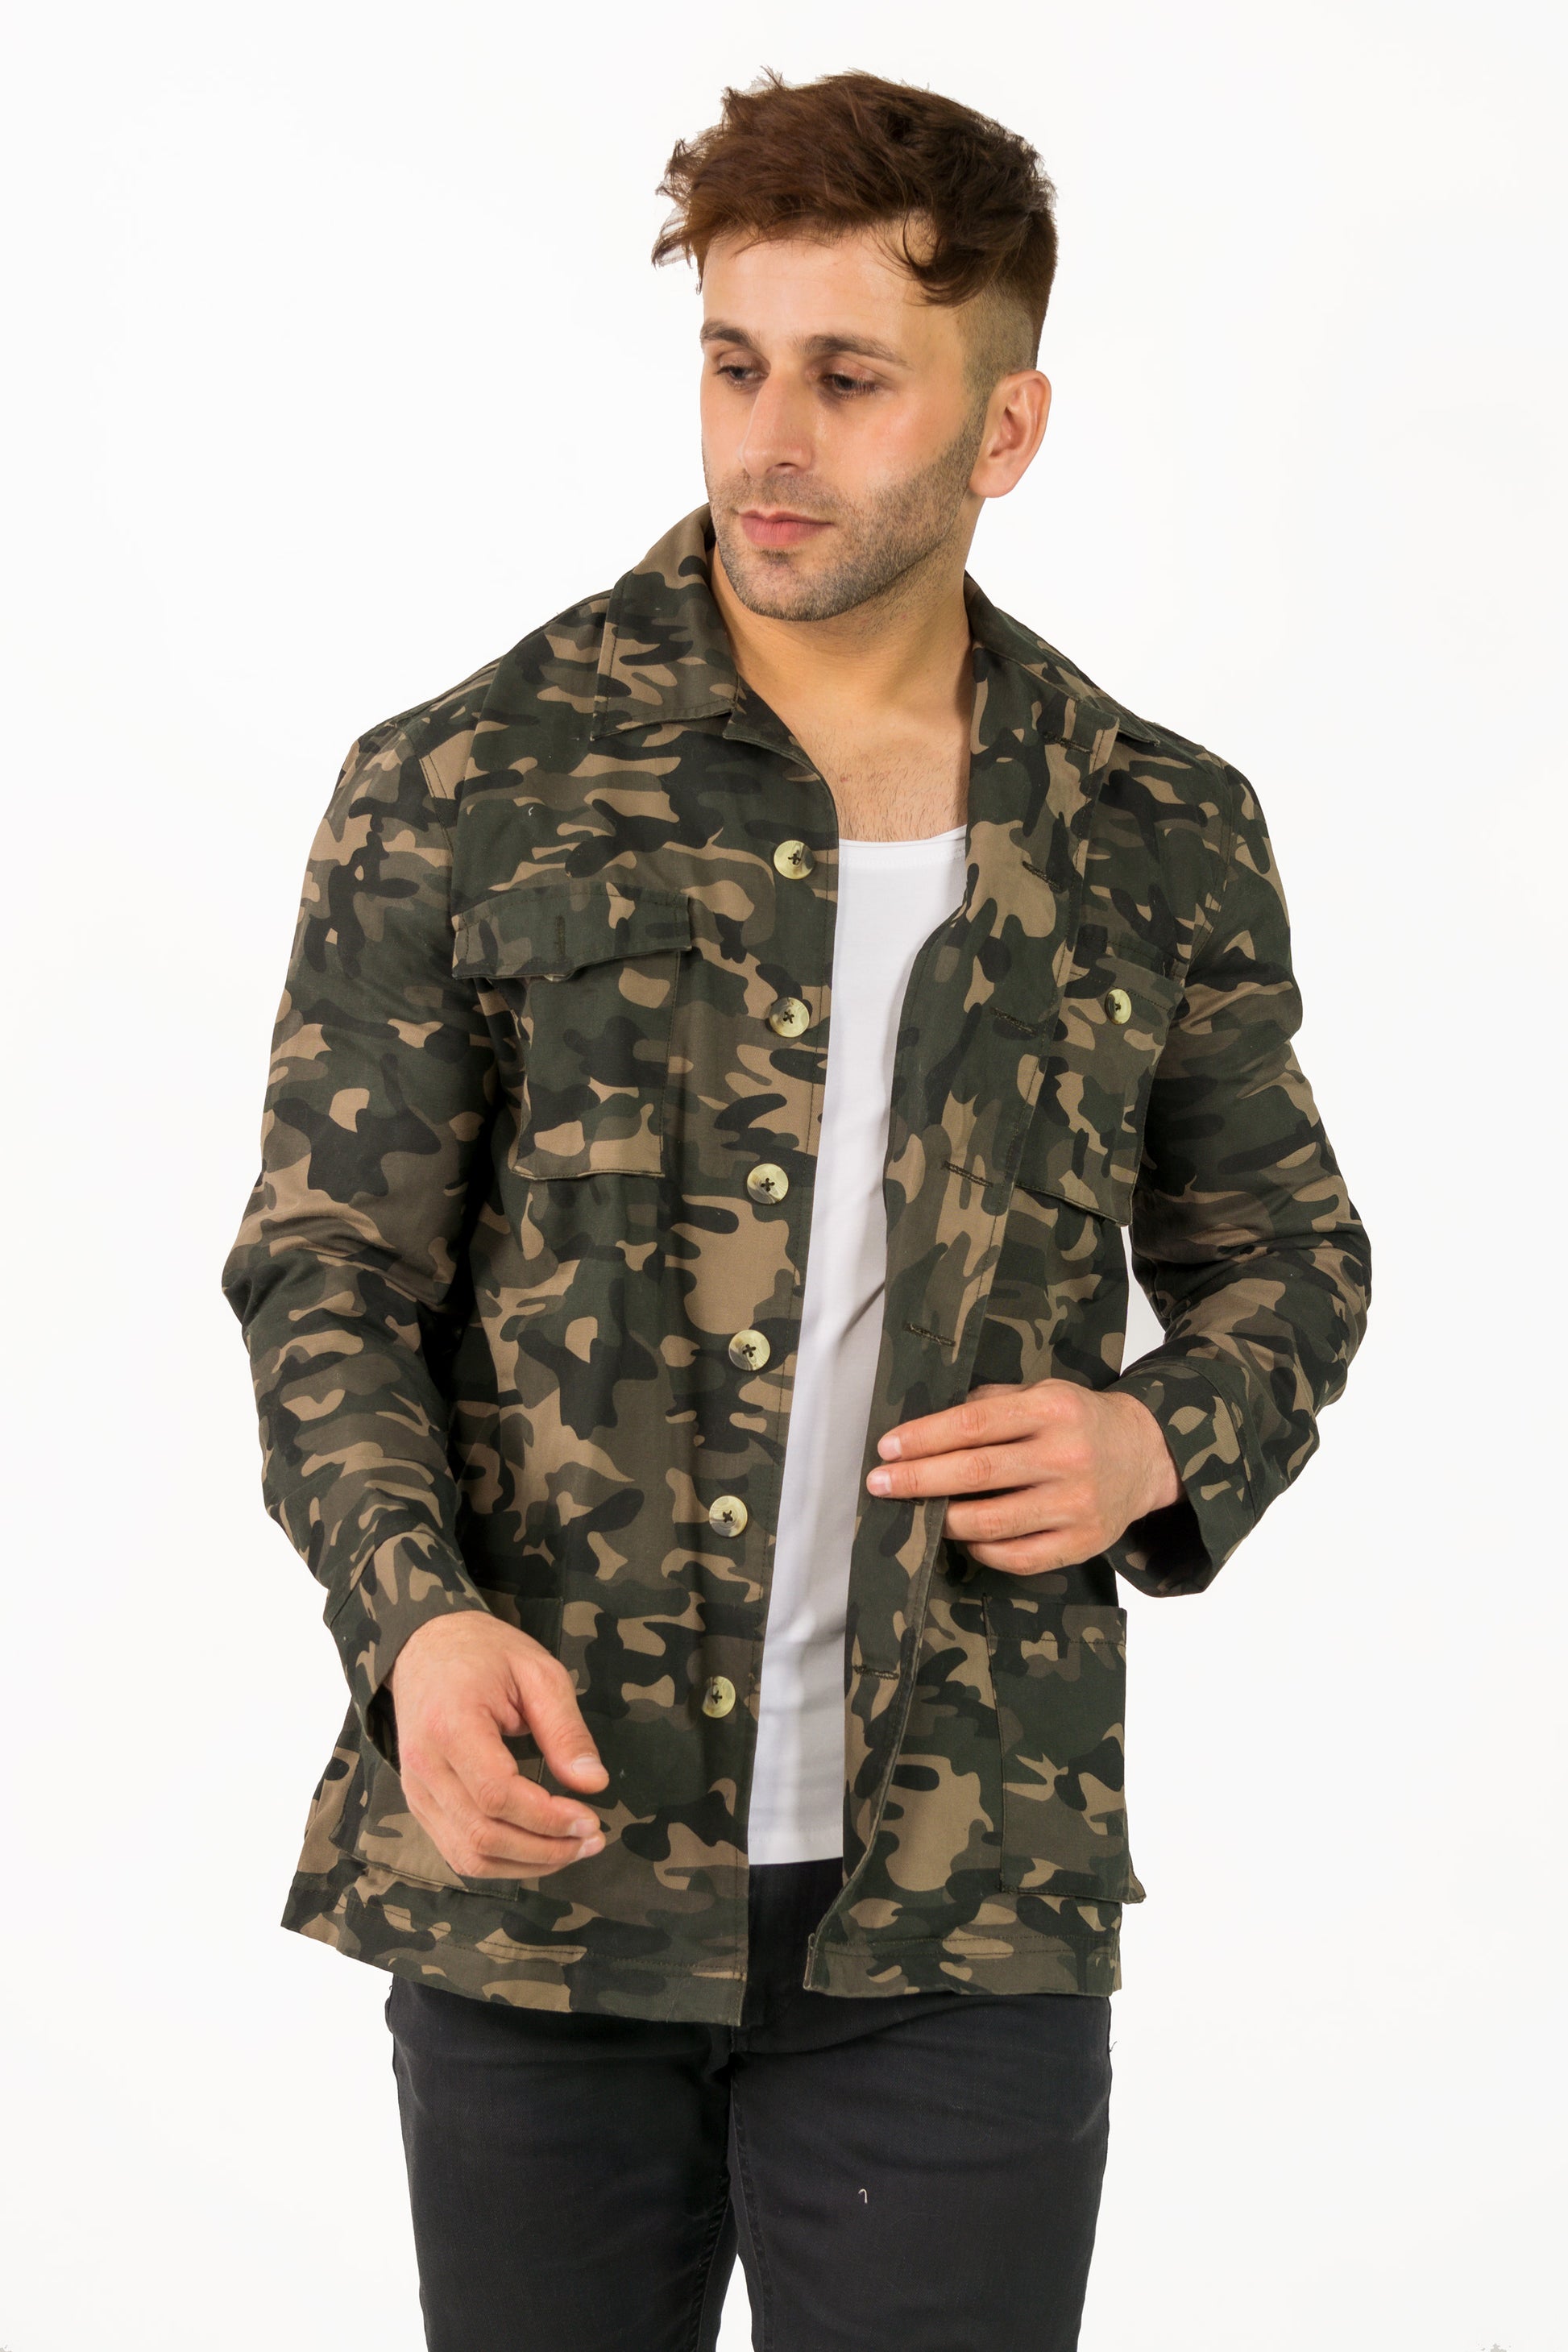 Maverick Camouflage Men's Jacket